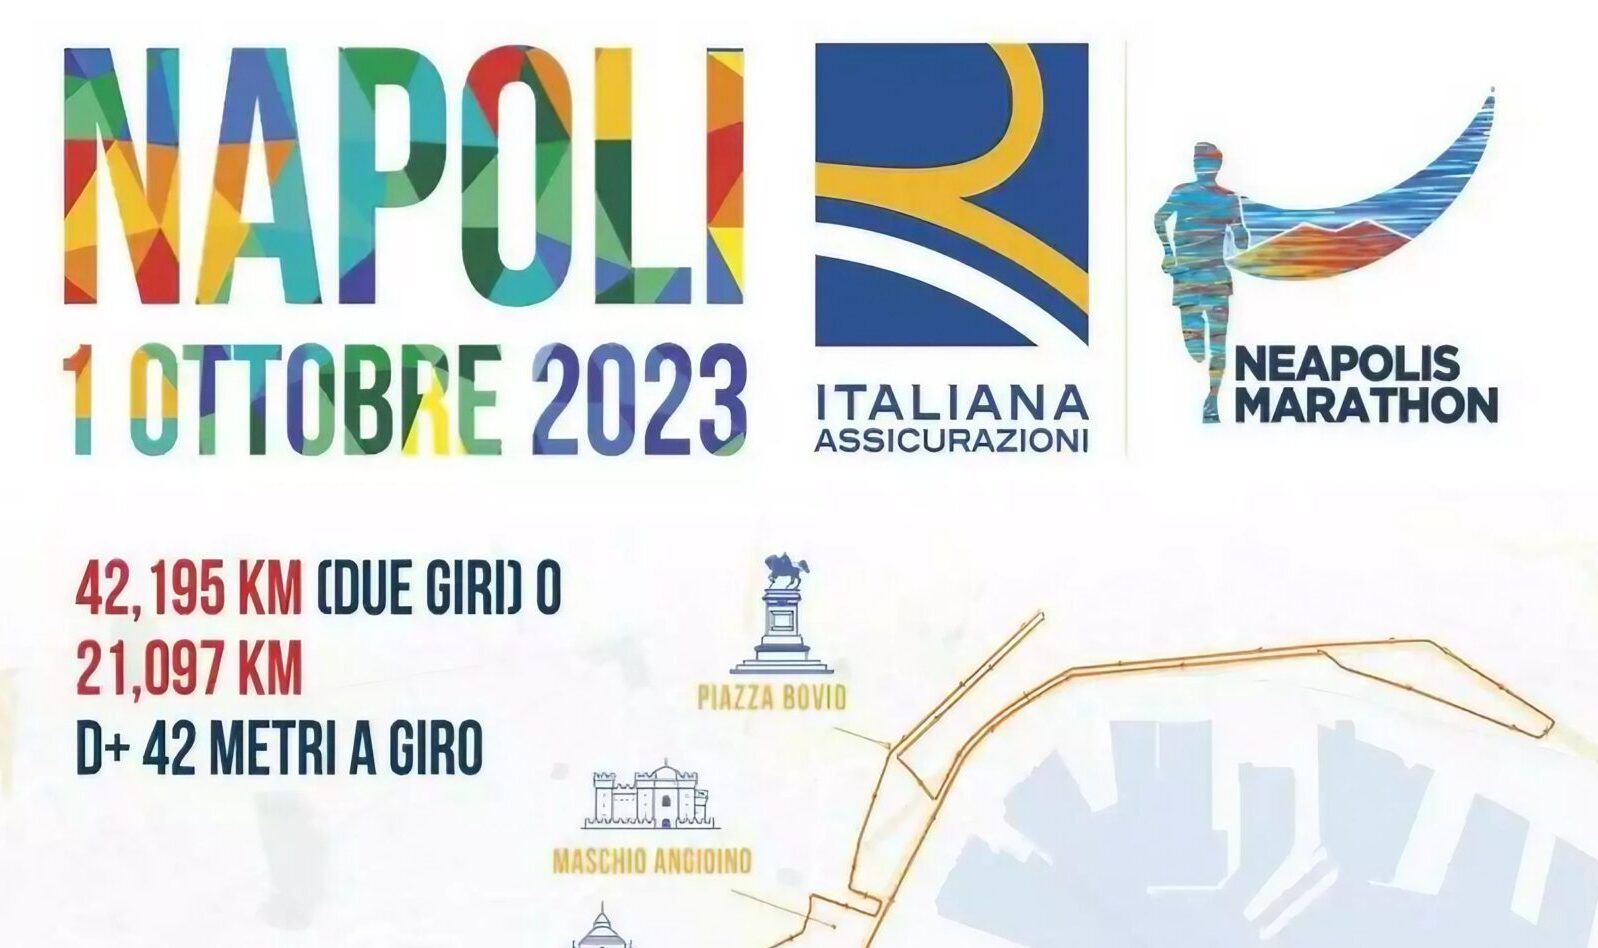 Poster of the 2023 Naples Marathon